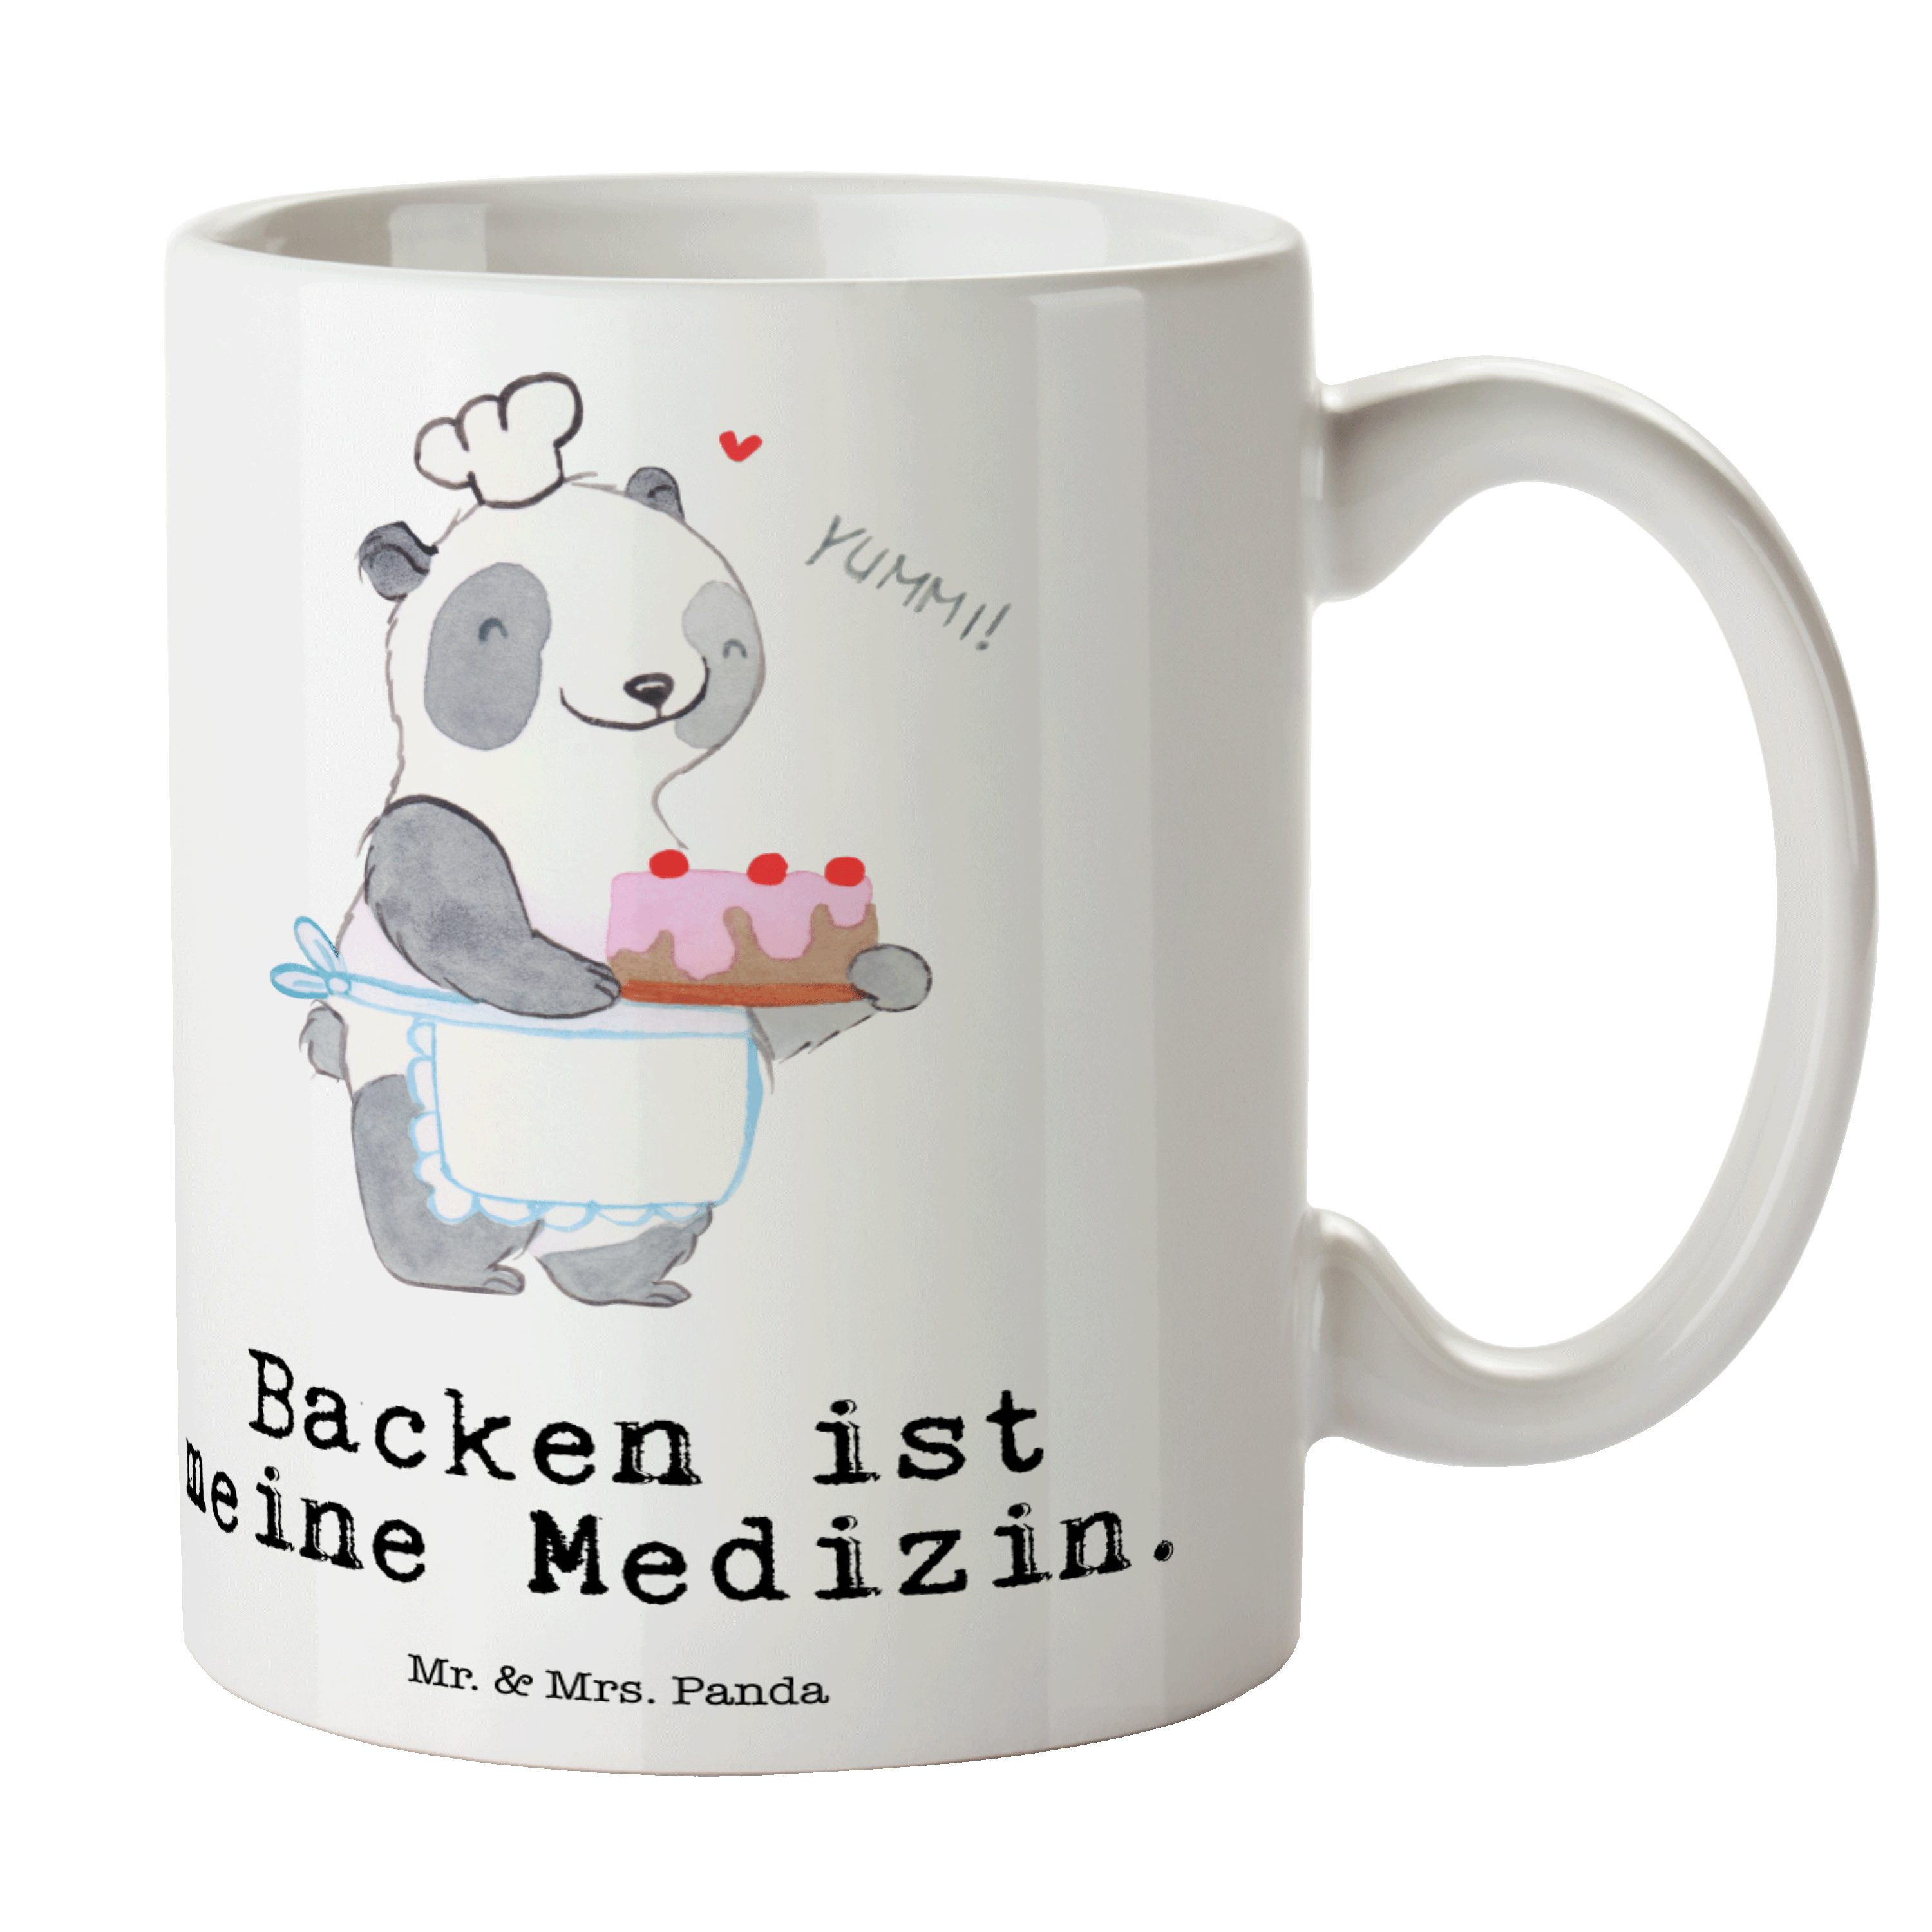 Mr. & Mrs. Panda Tasse Panda Backen Medizin - Weiß - Geschenk, Danke, Auszeichnung, Tasse, K, Keramik